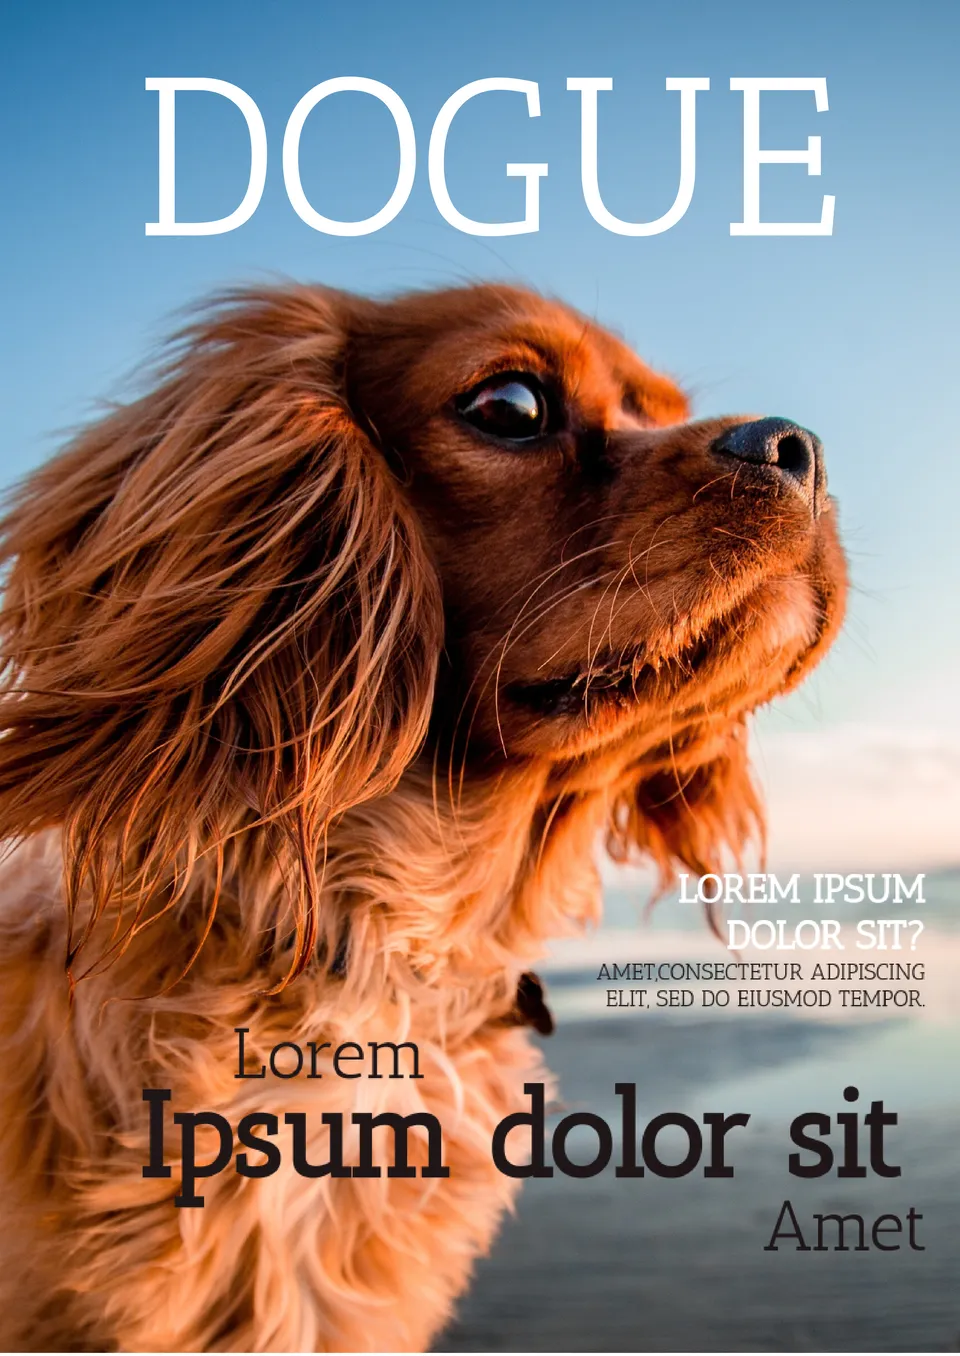 Dogue magazine